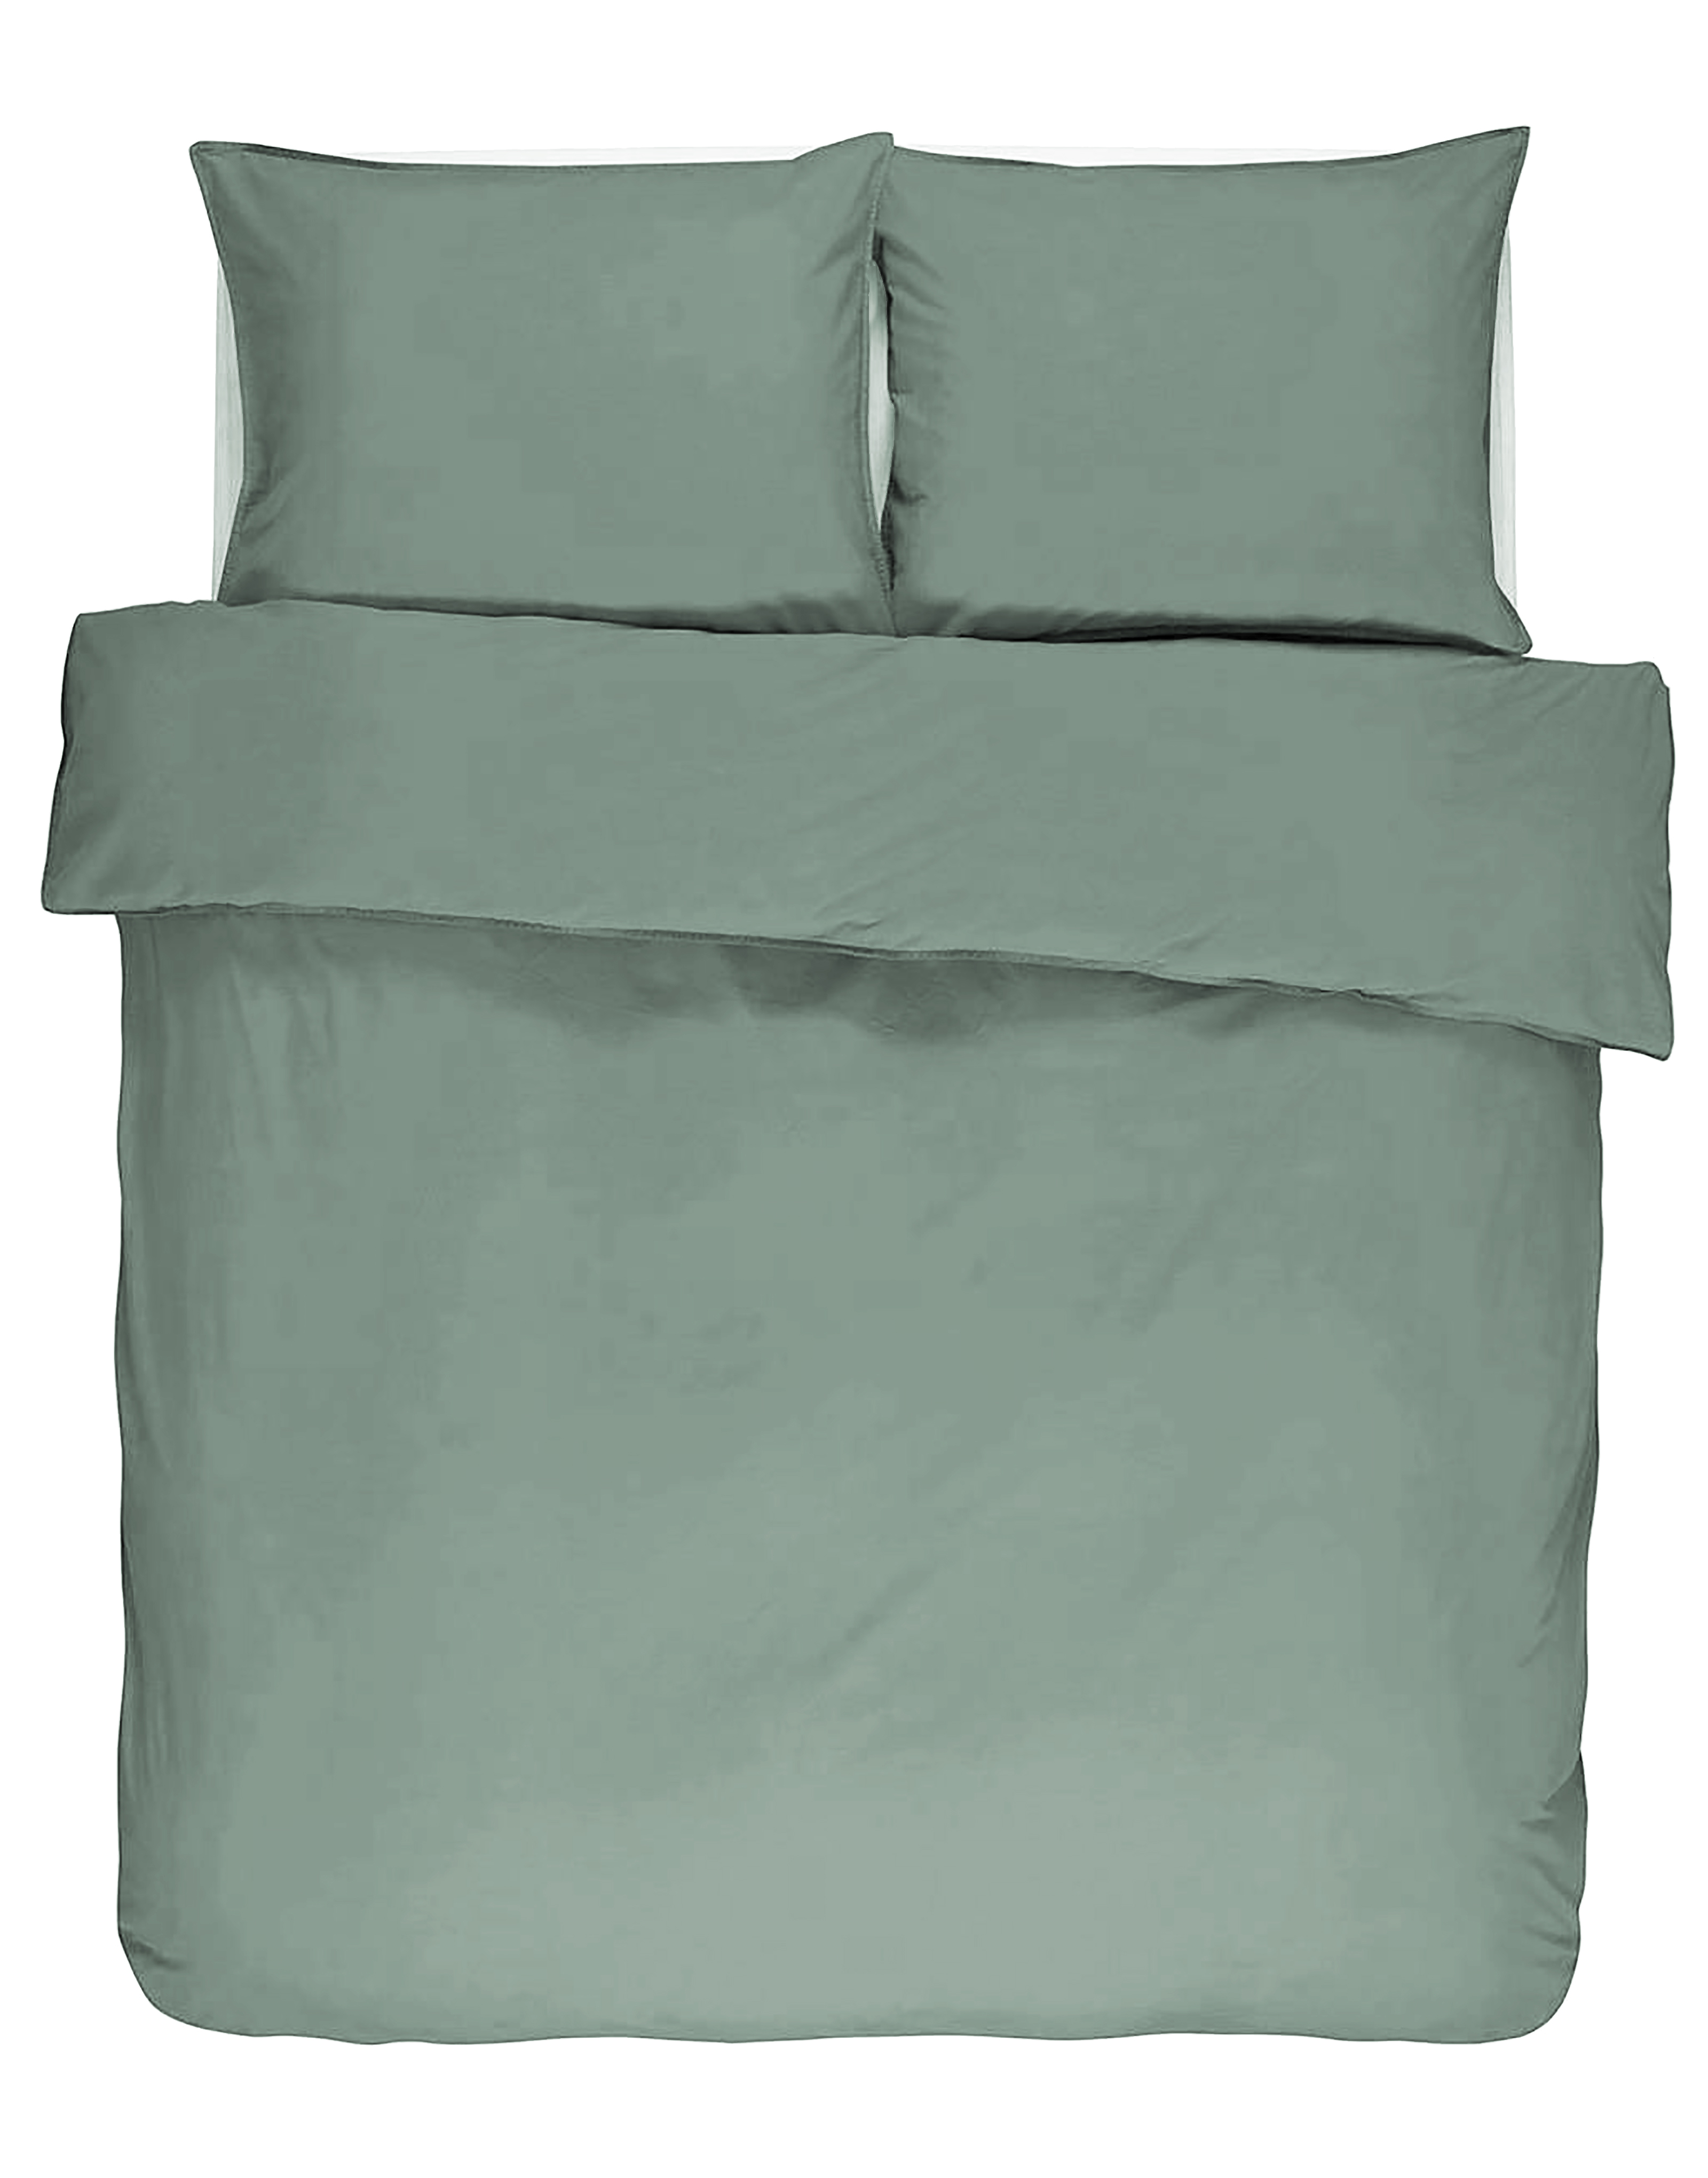 Duvet cover  IRIS, Stone washed uni cotton, 240x220, green